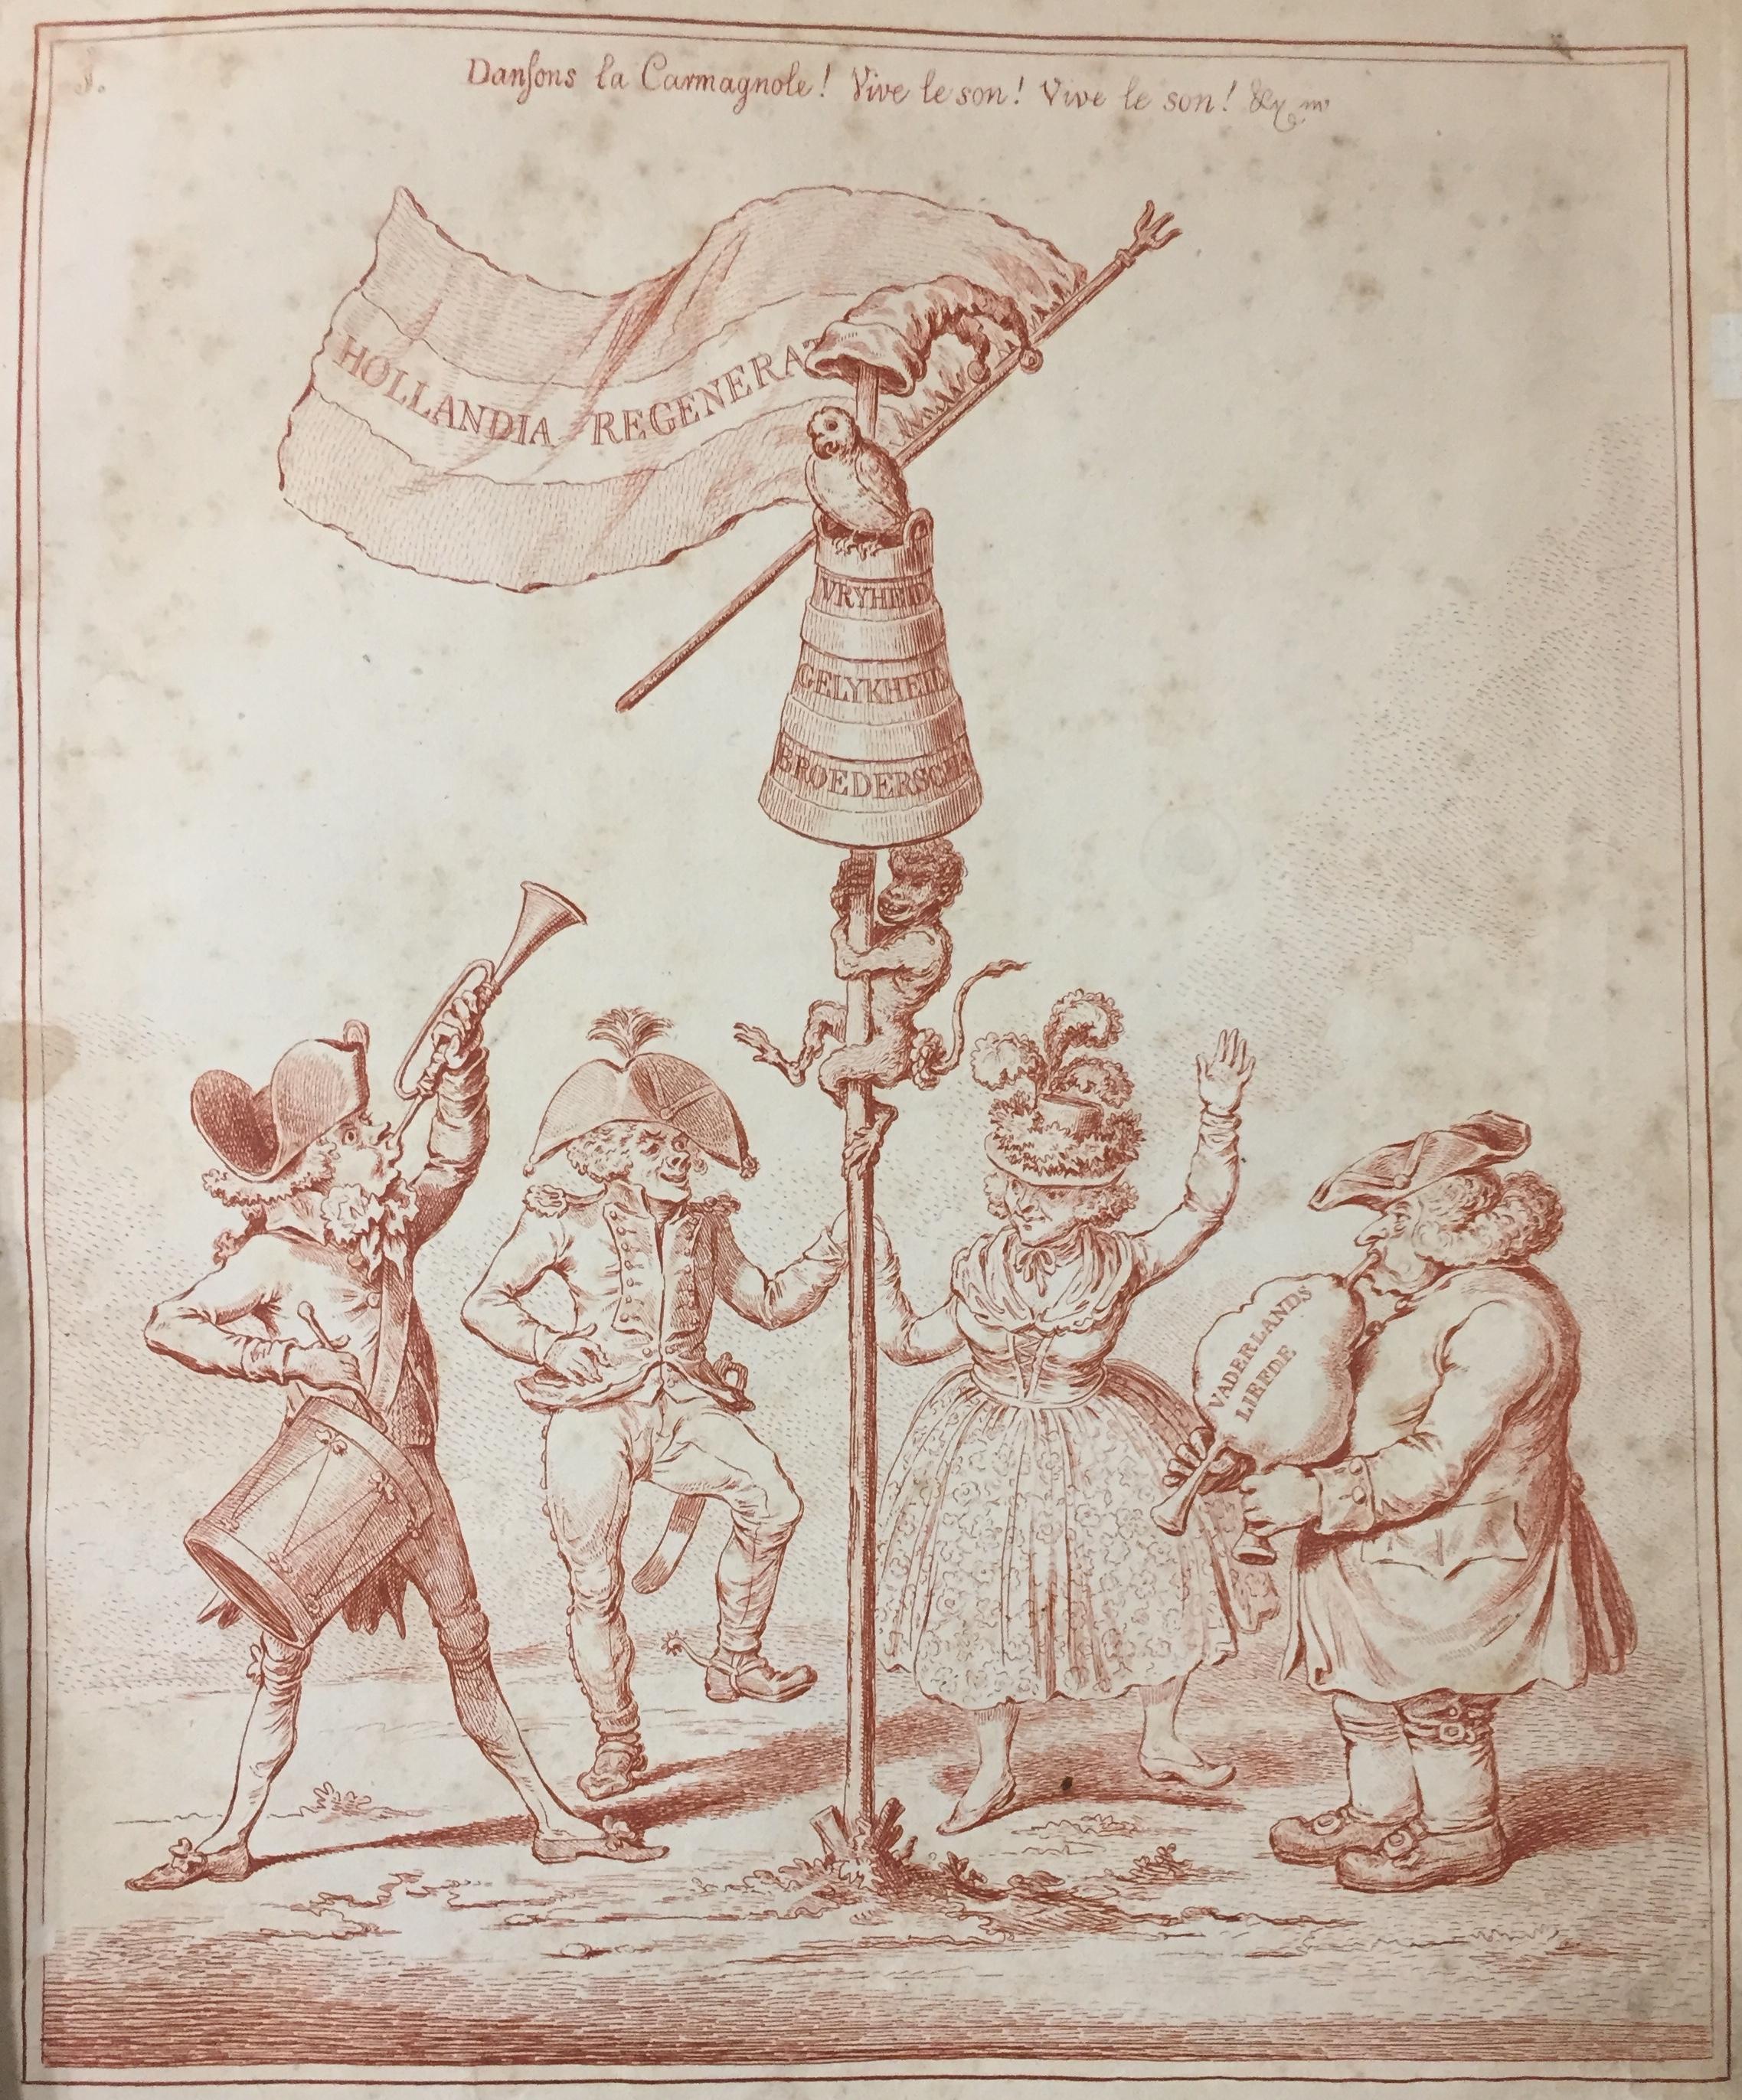 Hollandia Regenerata – seltenes Original illustriertes Pamphlet – 1795 im Angebot 3